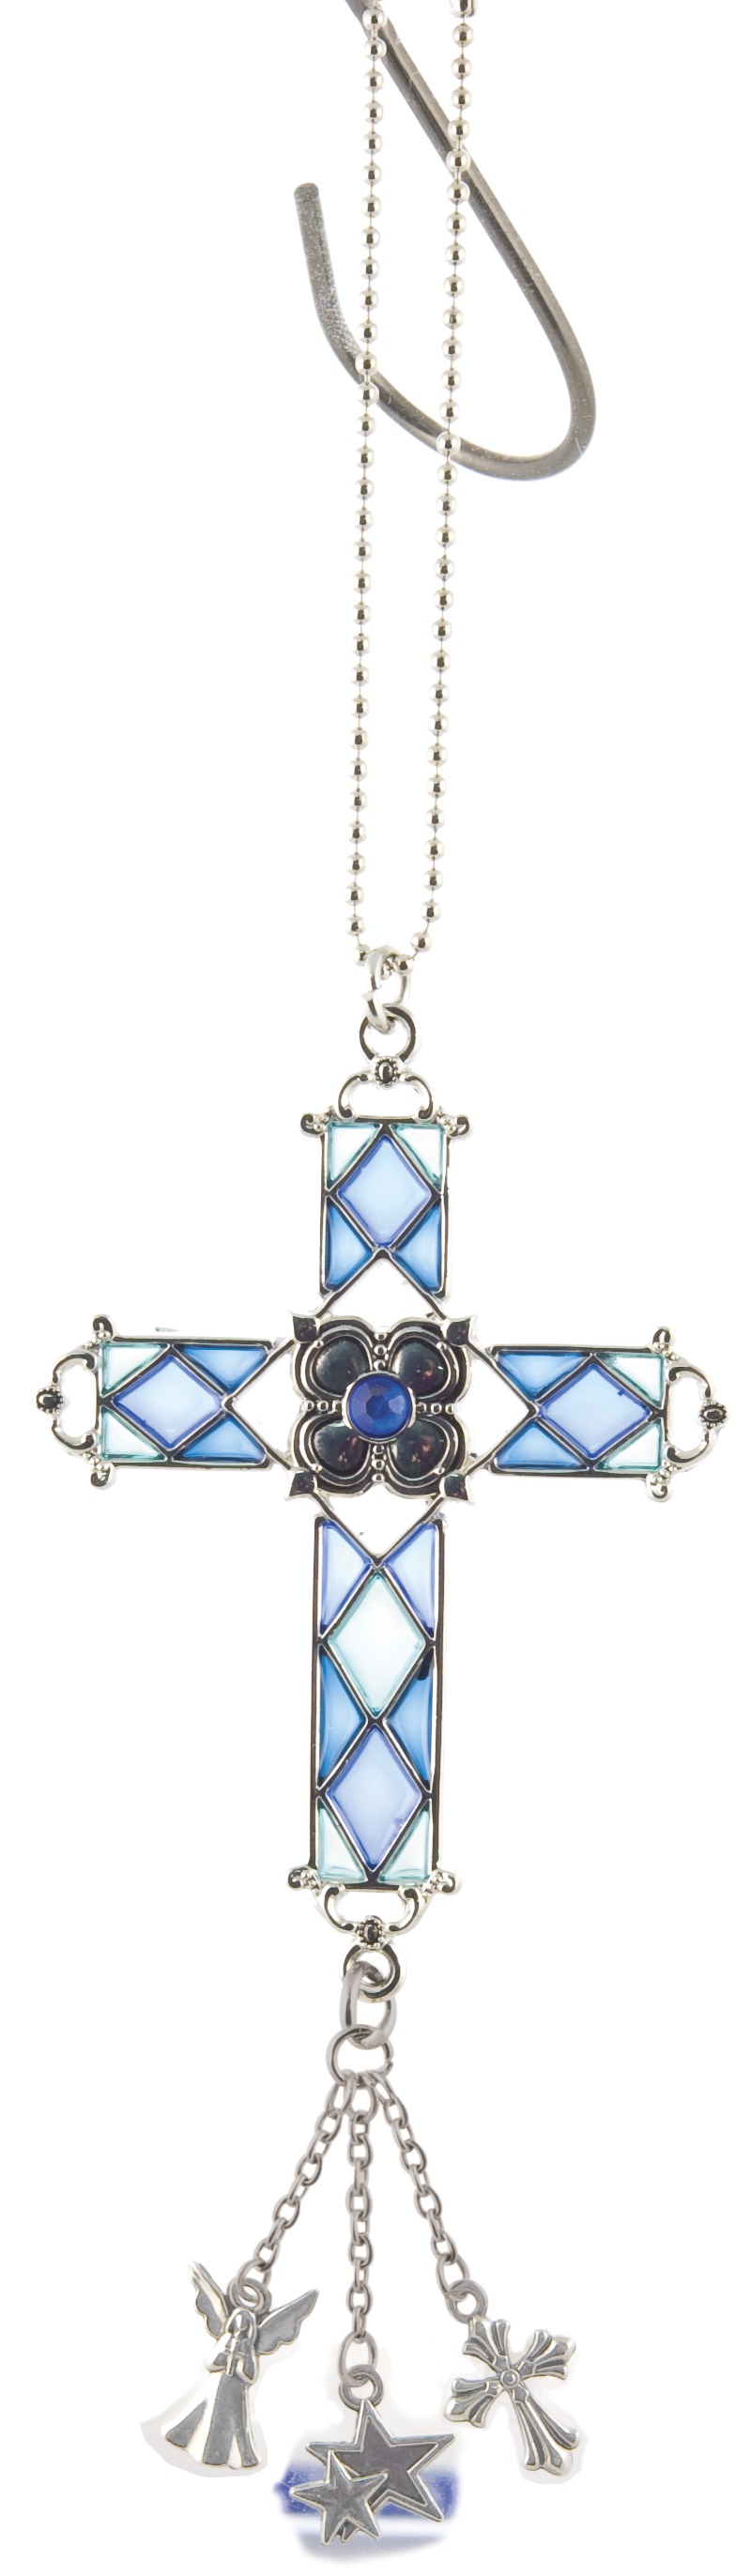 Cross window ornament Glass Cross ornament Stained glass Cross